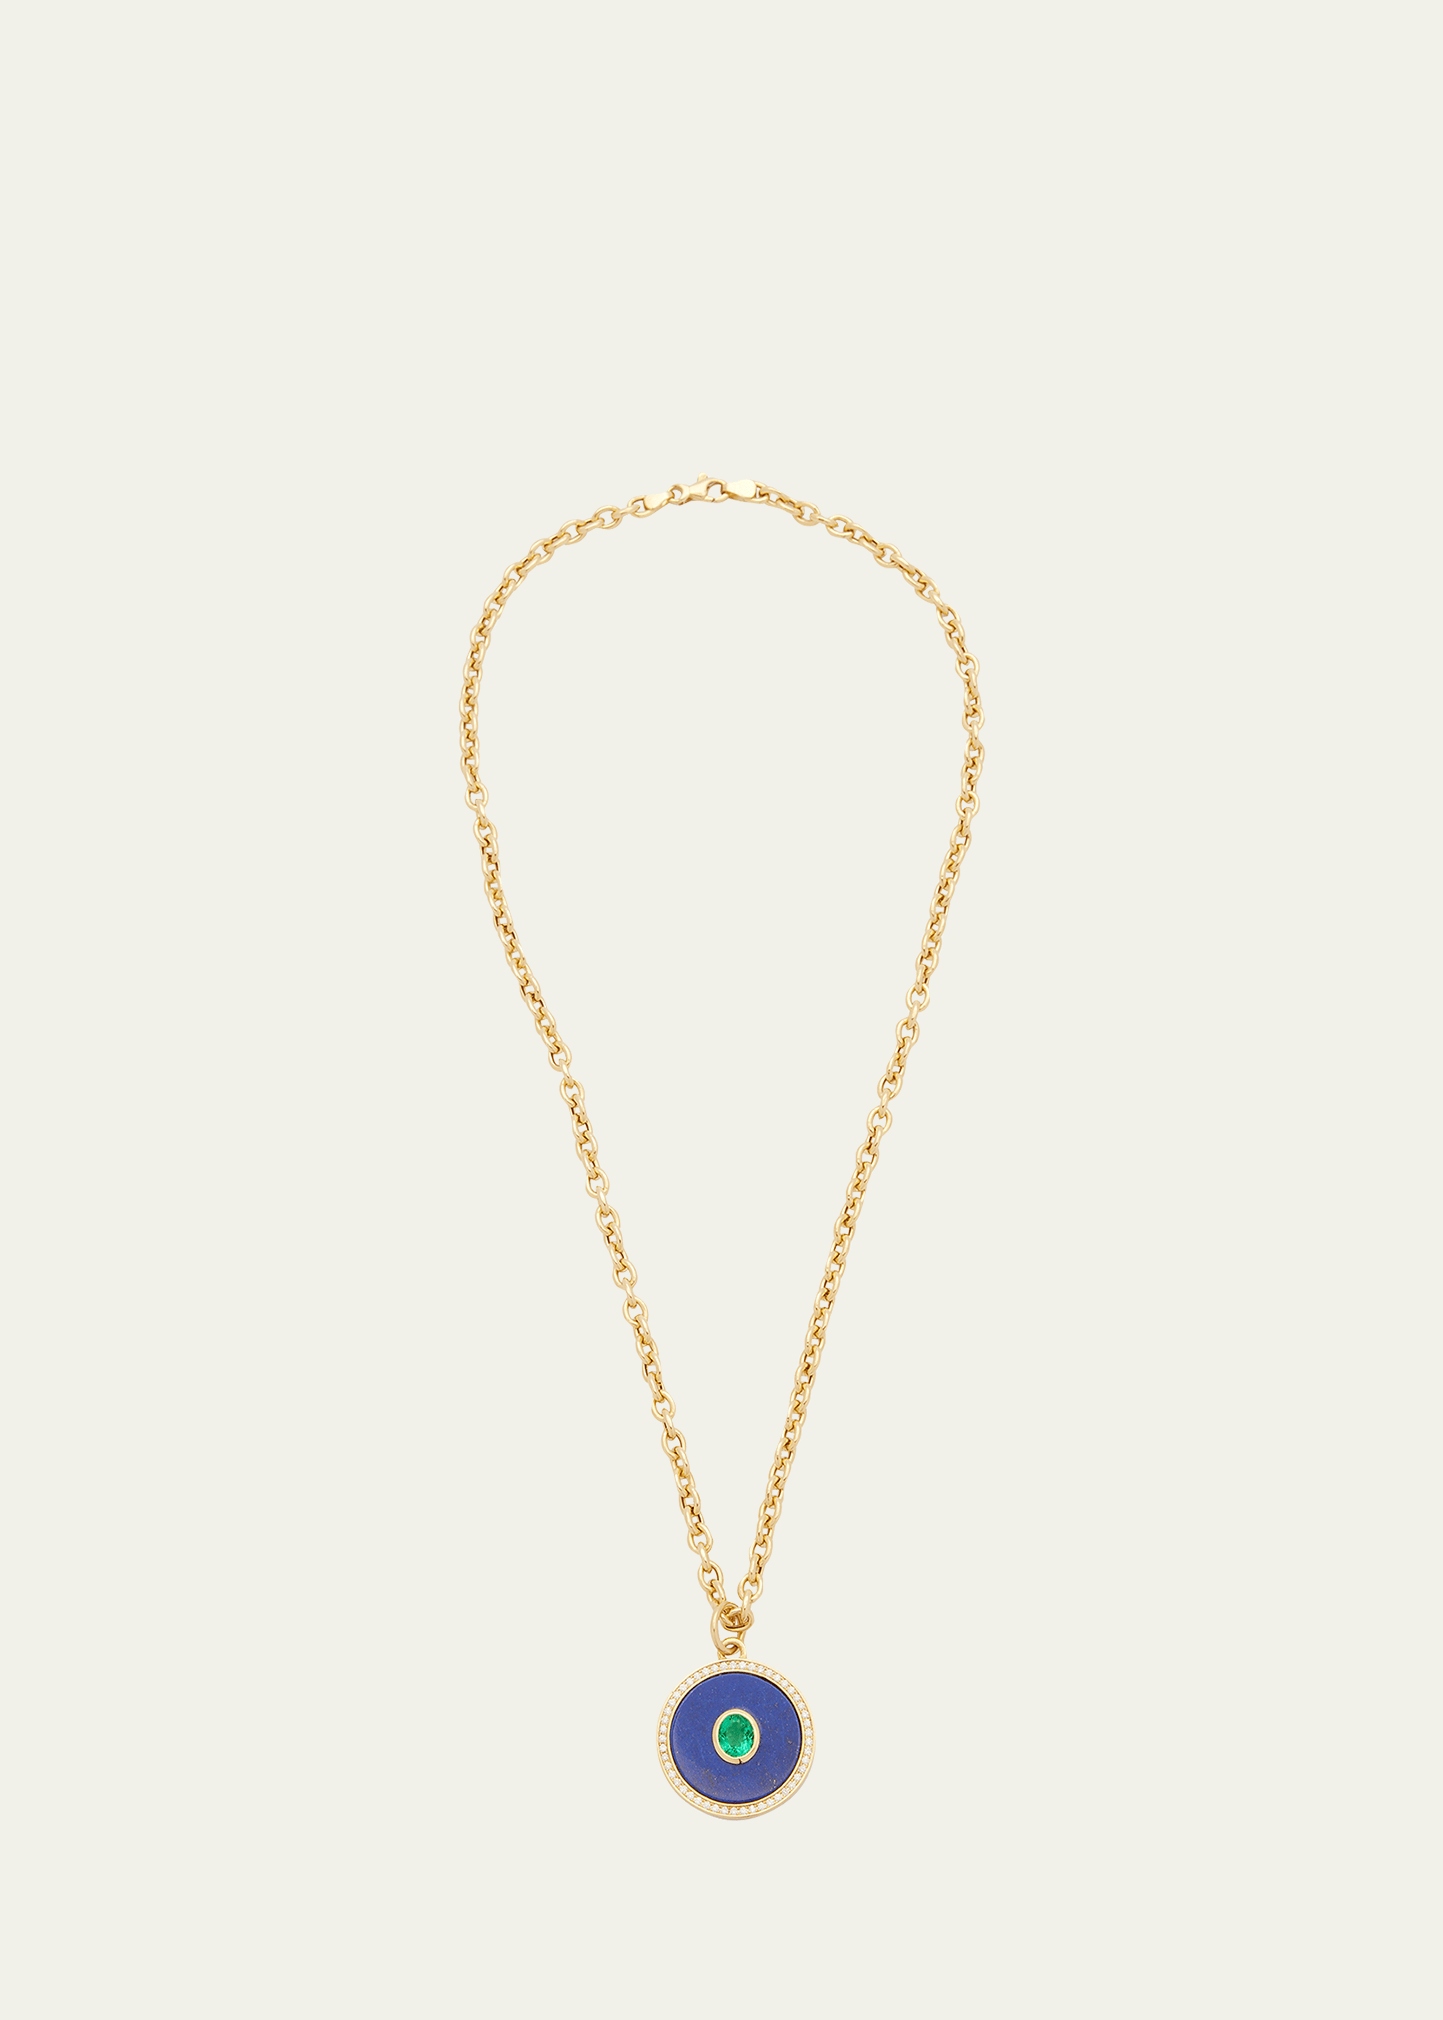 Jemma Wynne 18K Yellow Gold Zodiac Cable Pendant Chain Necklace